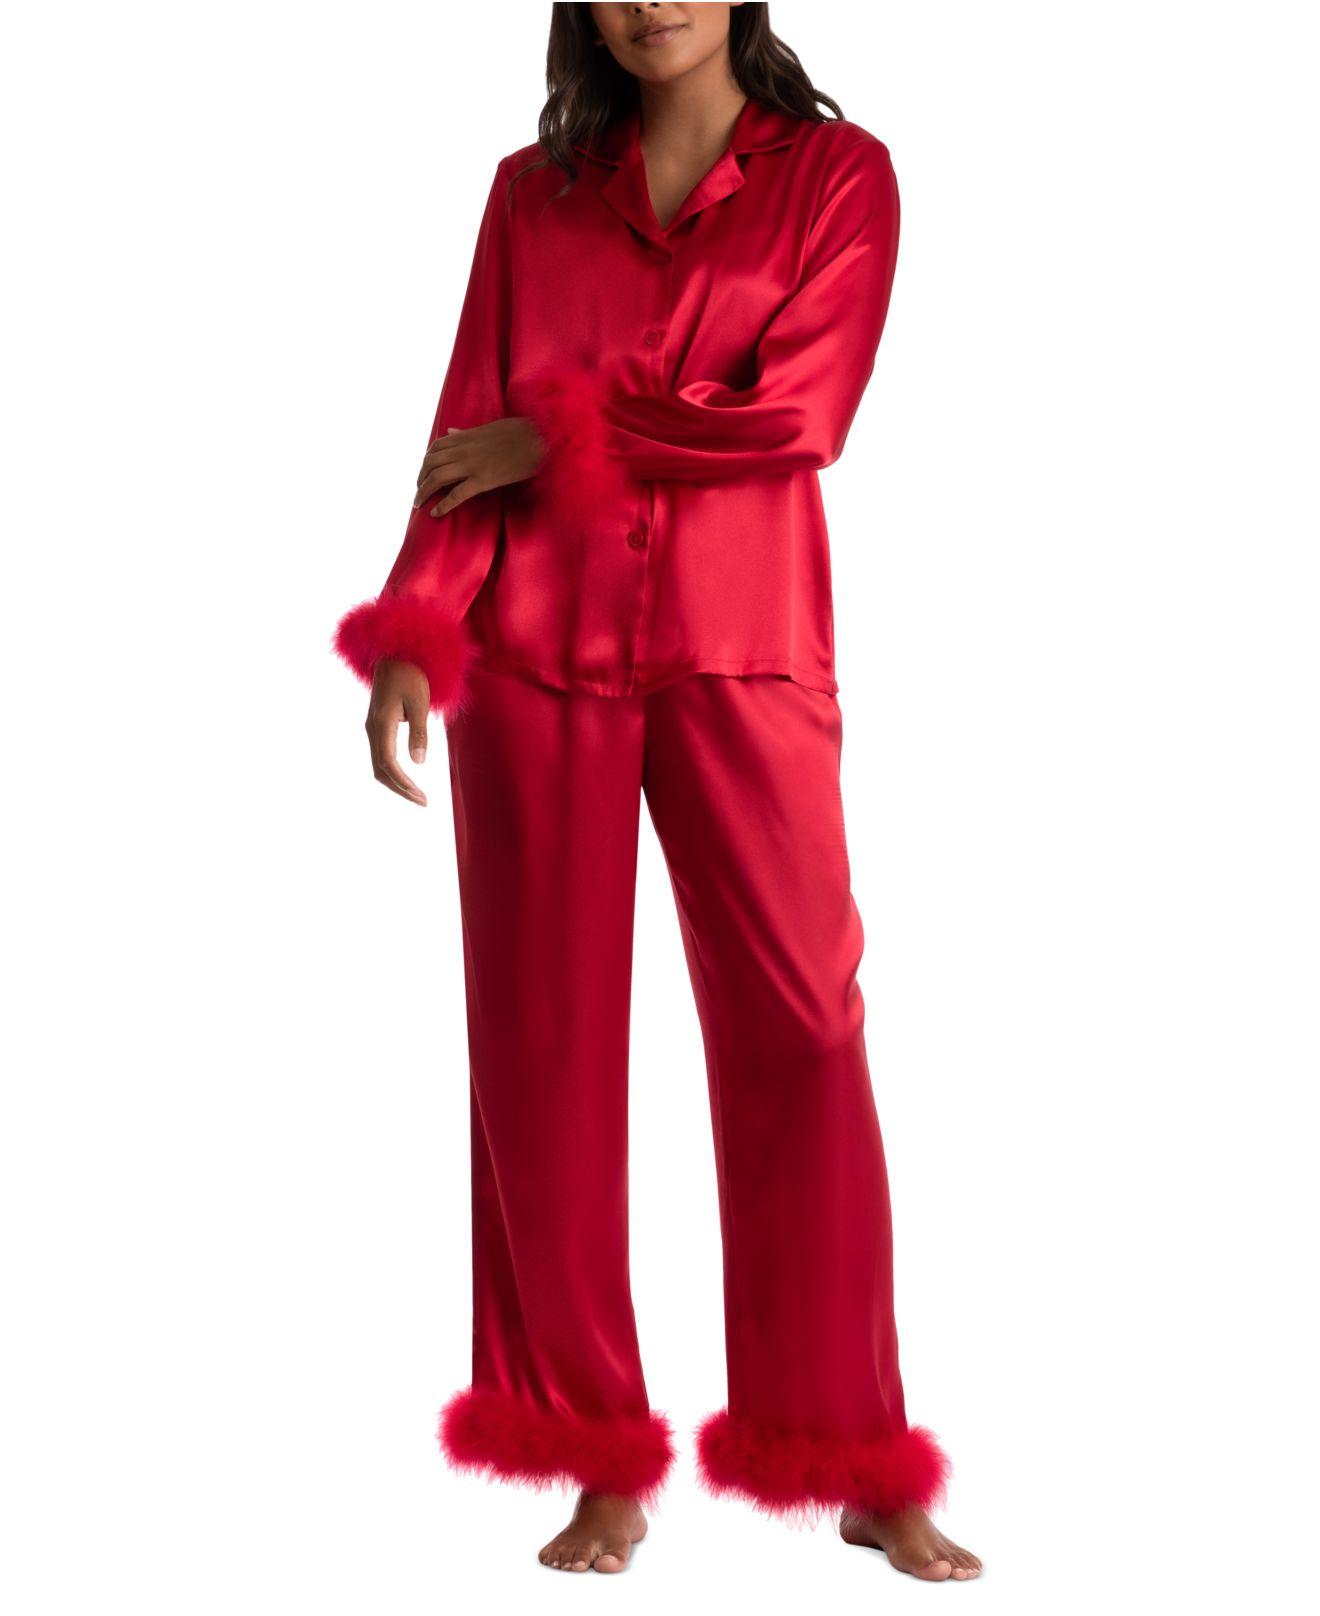 Linea Donatella Marabou Feather Satin Pajama Set in Red | Lyst